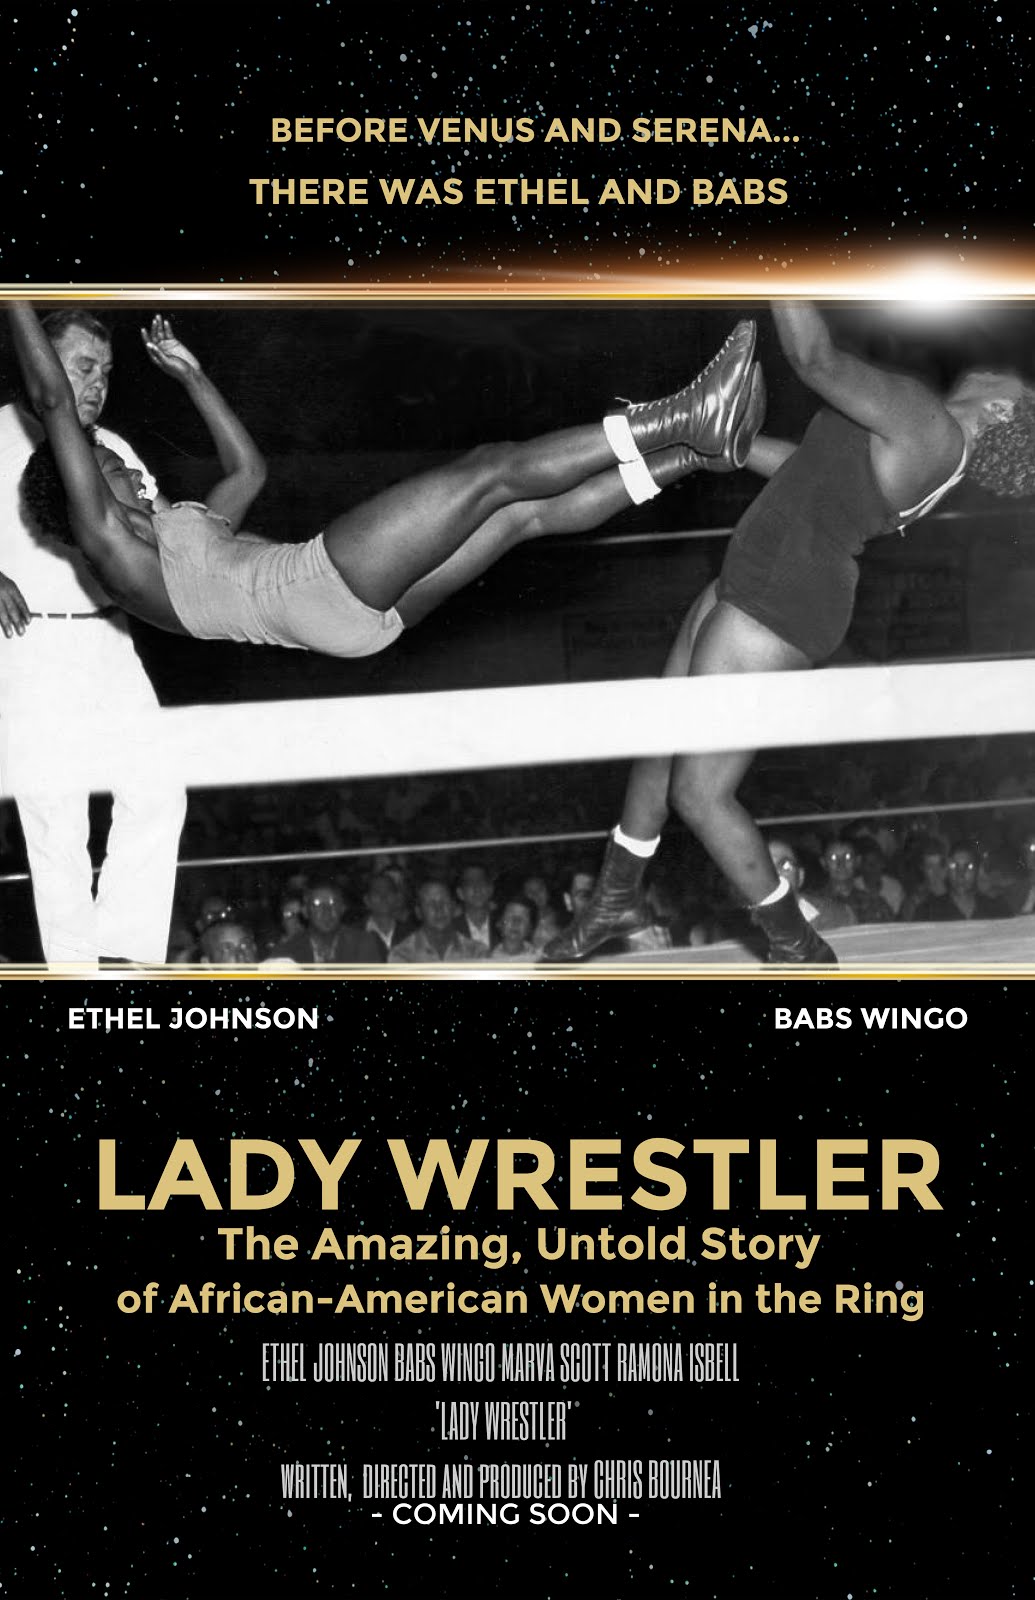 "Lady Wrestler" Documentary